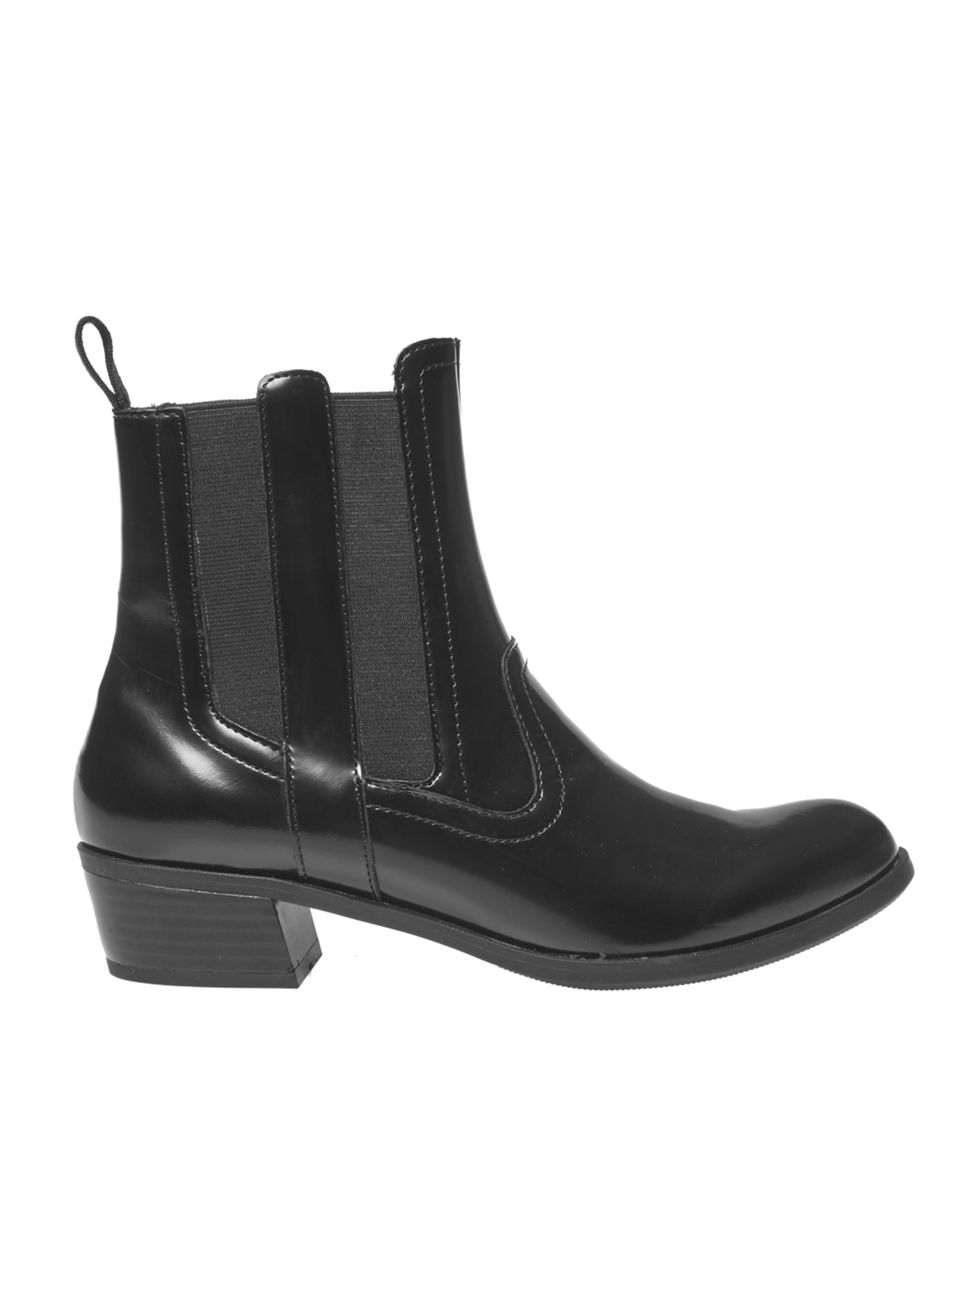 Footwear, Brown, Boot, Shoe, Leather, Black, Grey, Beige, Tan, Synthetic rubber, 